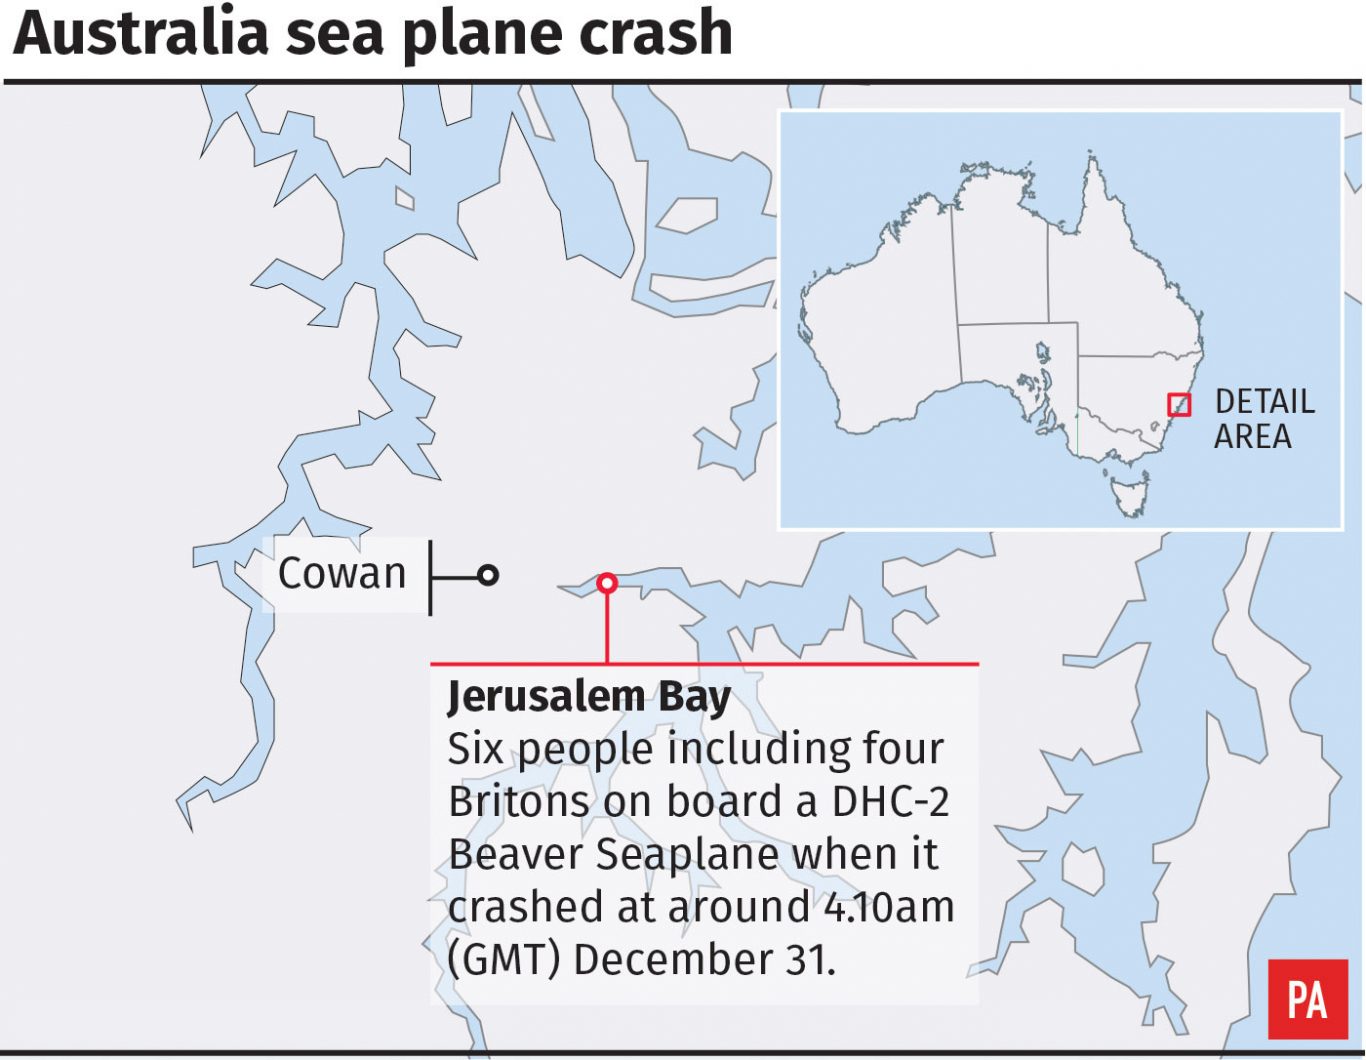 Australia sea plane crash (PA Graphic)